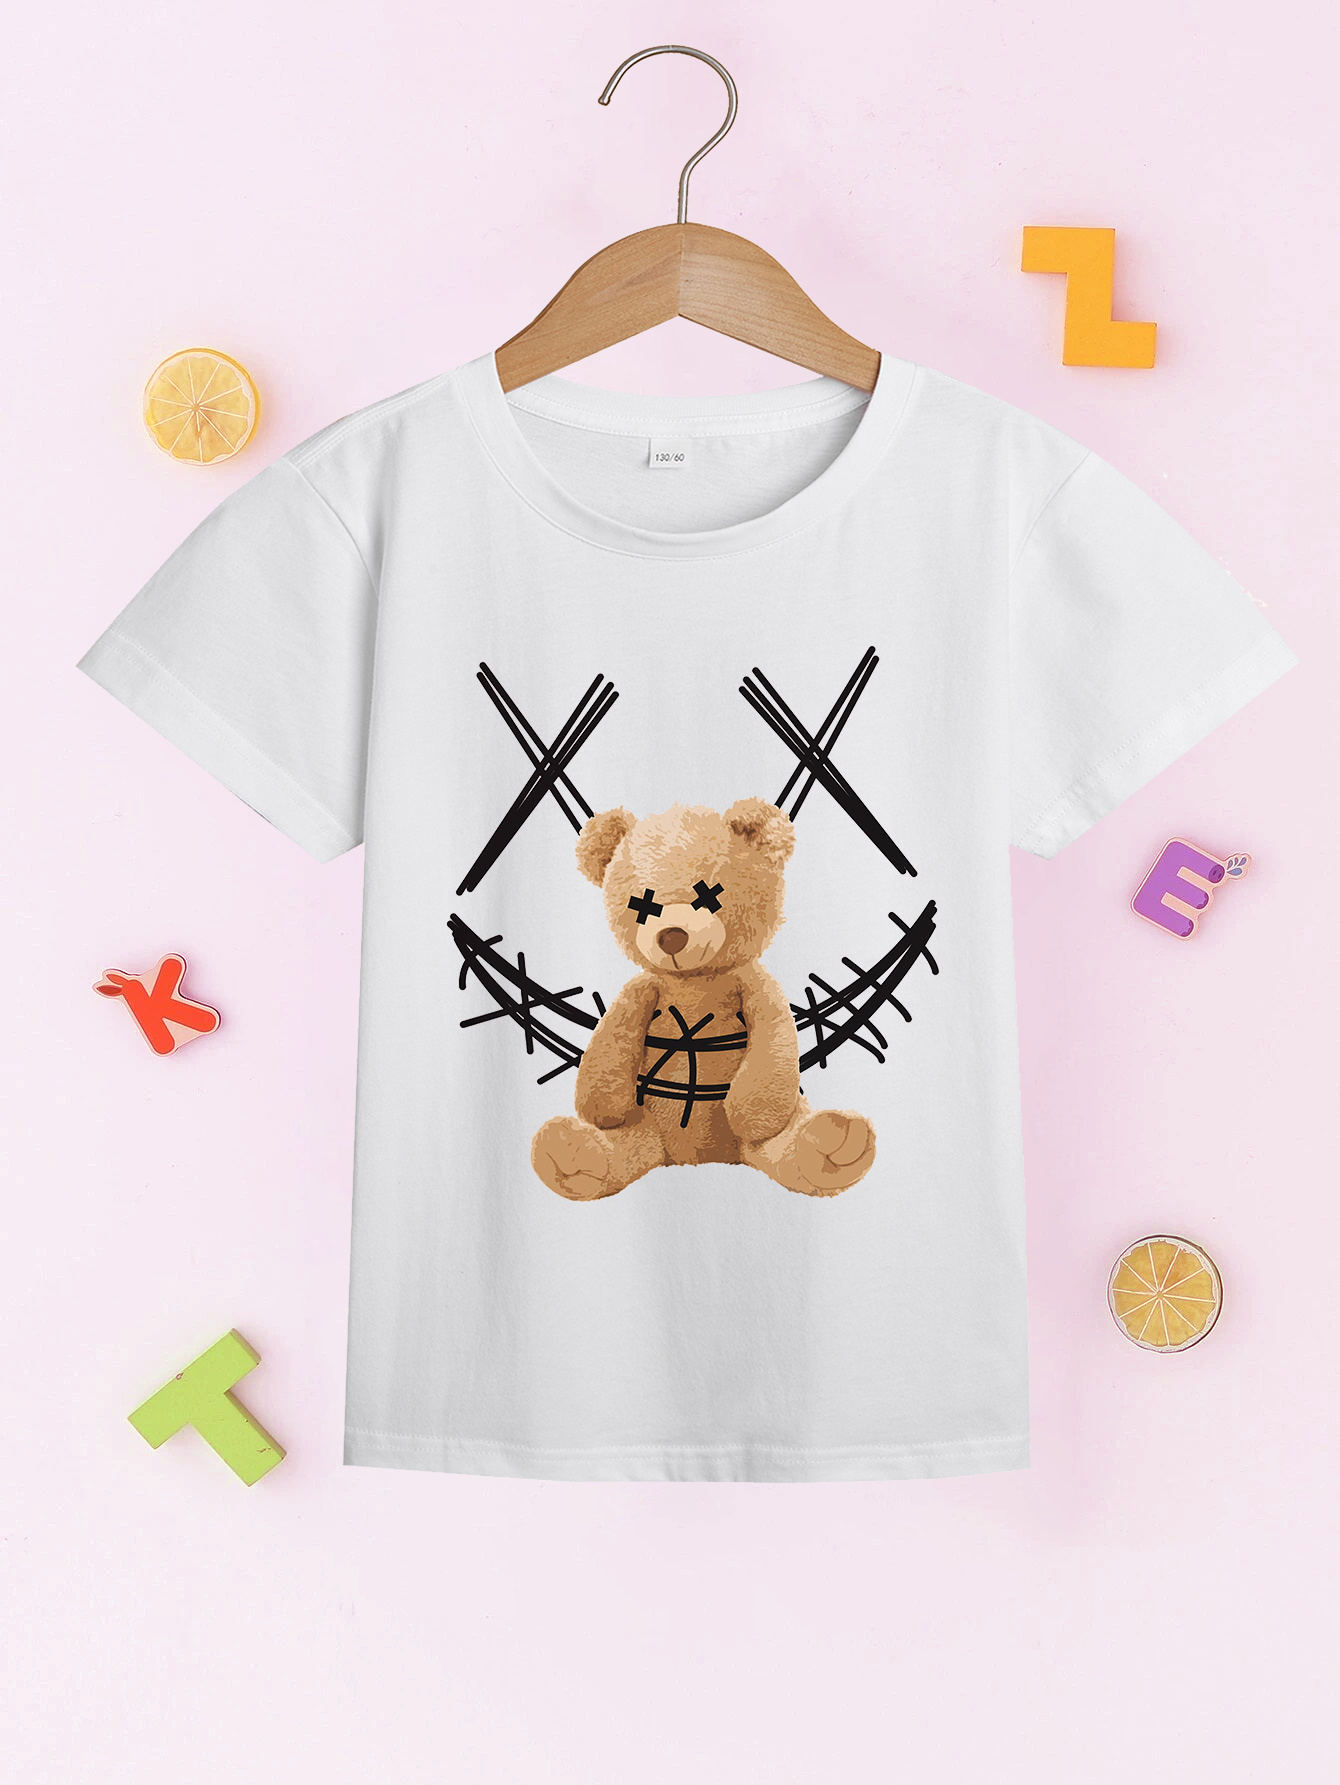 Kids Boys Roblox Print T-shirt Summer Casual Short Sleeve Crew Neck Tee  Tops